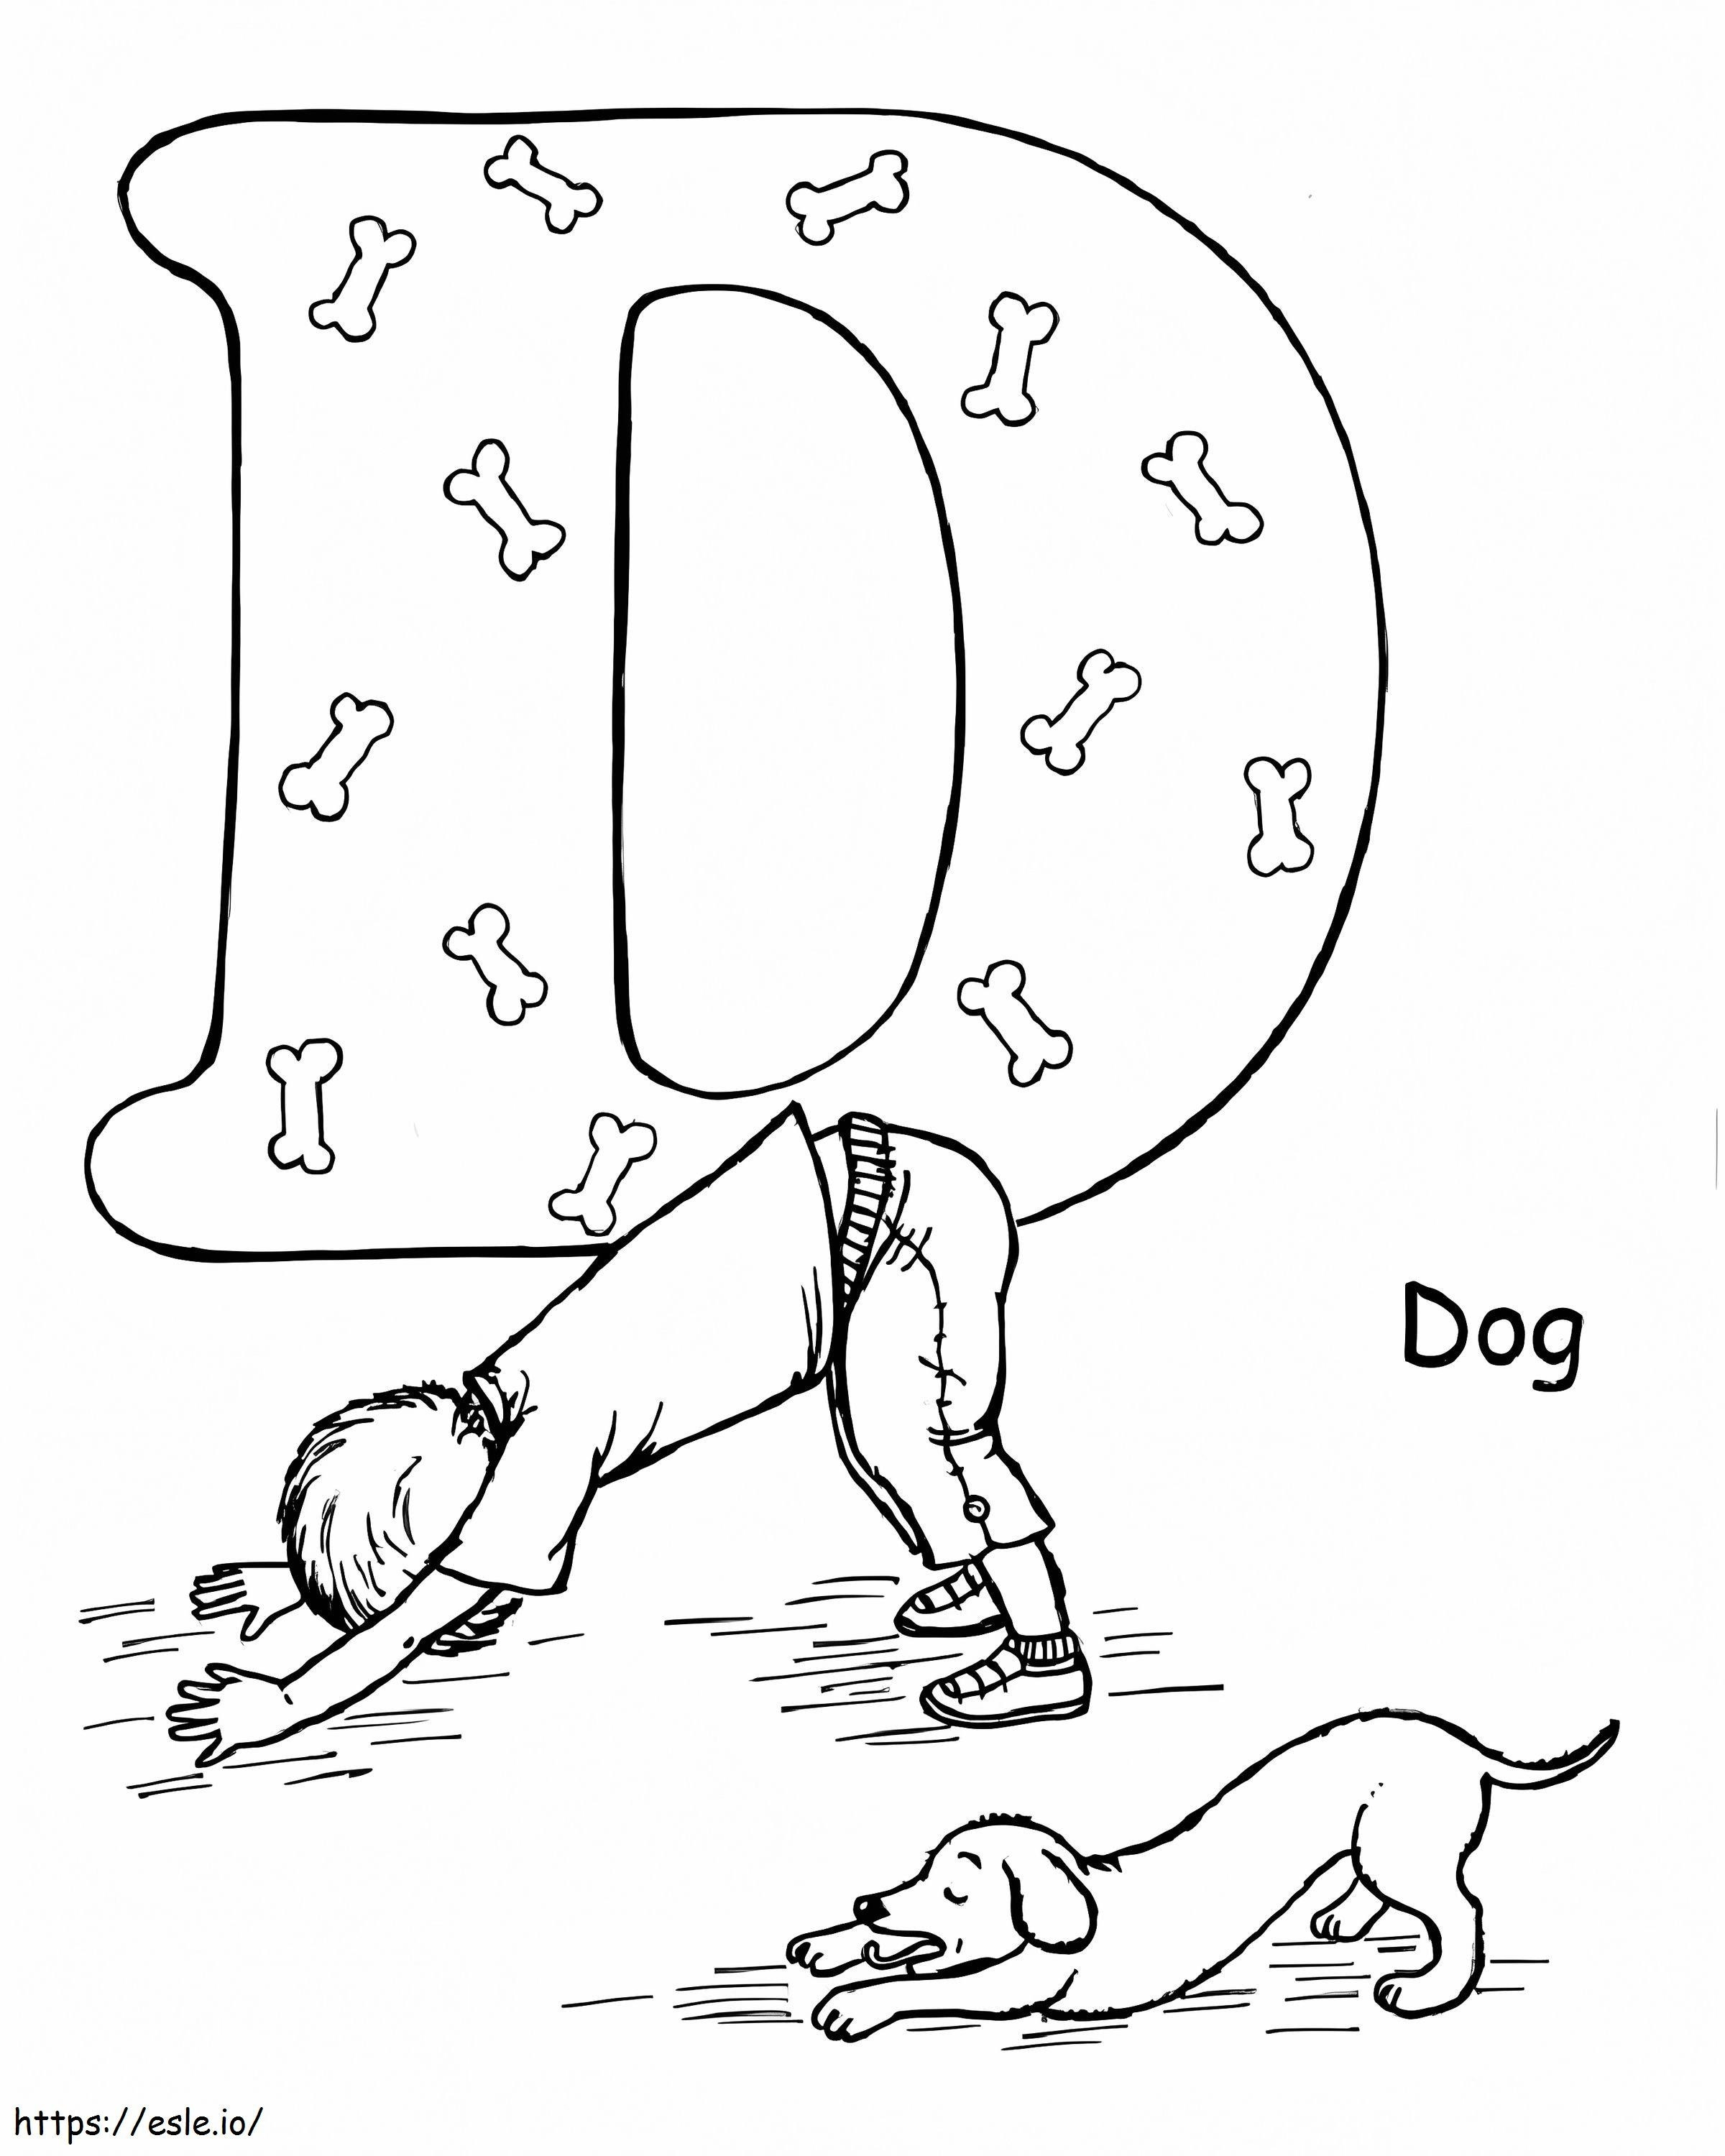 Yoga Dog Pose coloring page